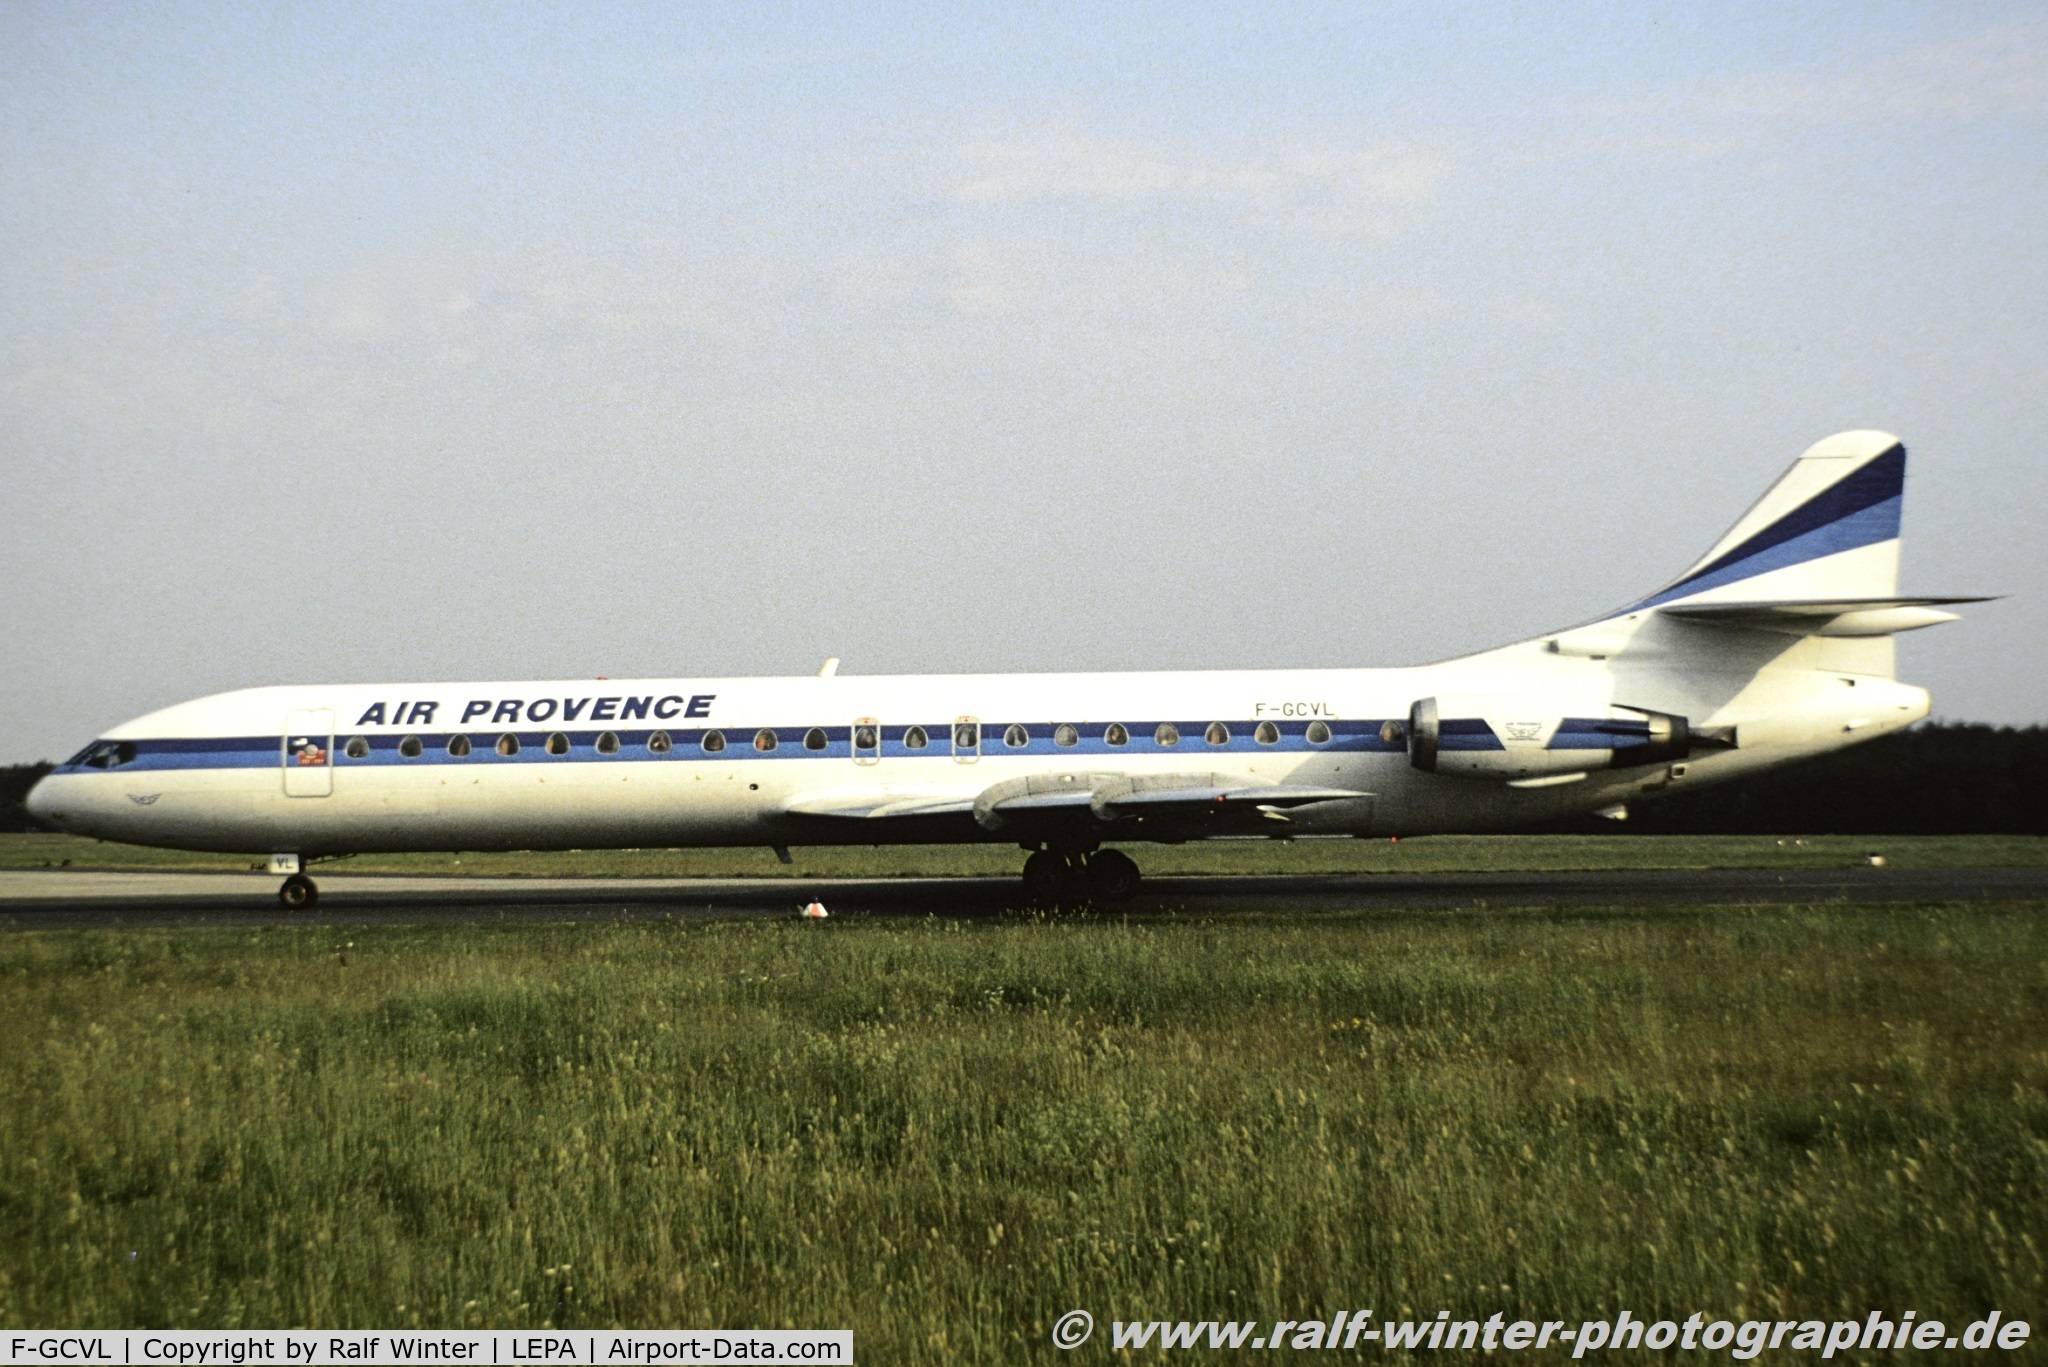 F-GCVL, 1972 Aerospatiale SE-210 Caravelle  12 C/N 273, Sud Aviation SE-210 Caravelle 12 - DG APR Air Provence International ex. OK-SAE - F-GCVL - 1995 - LEPA